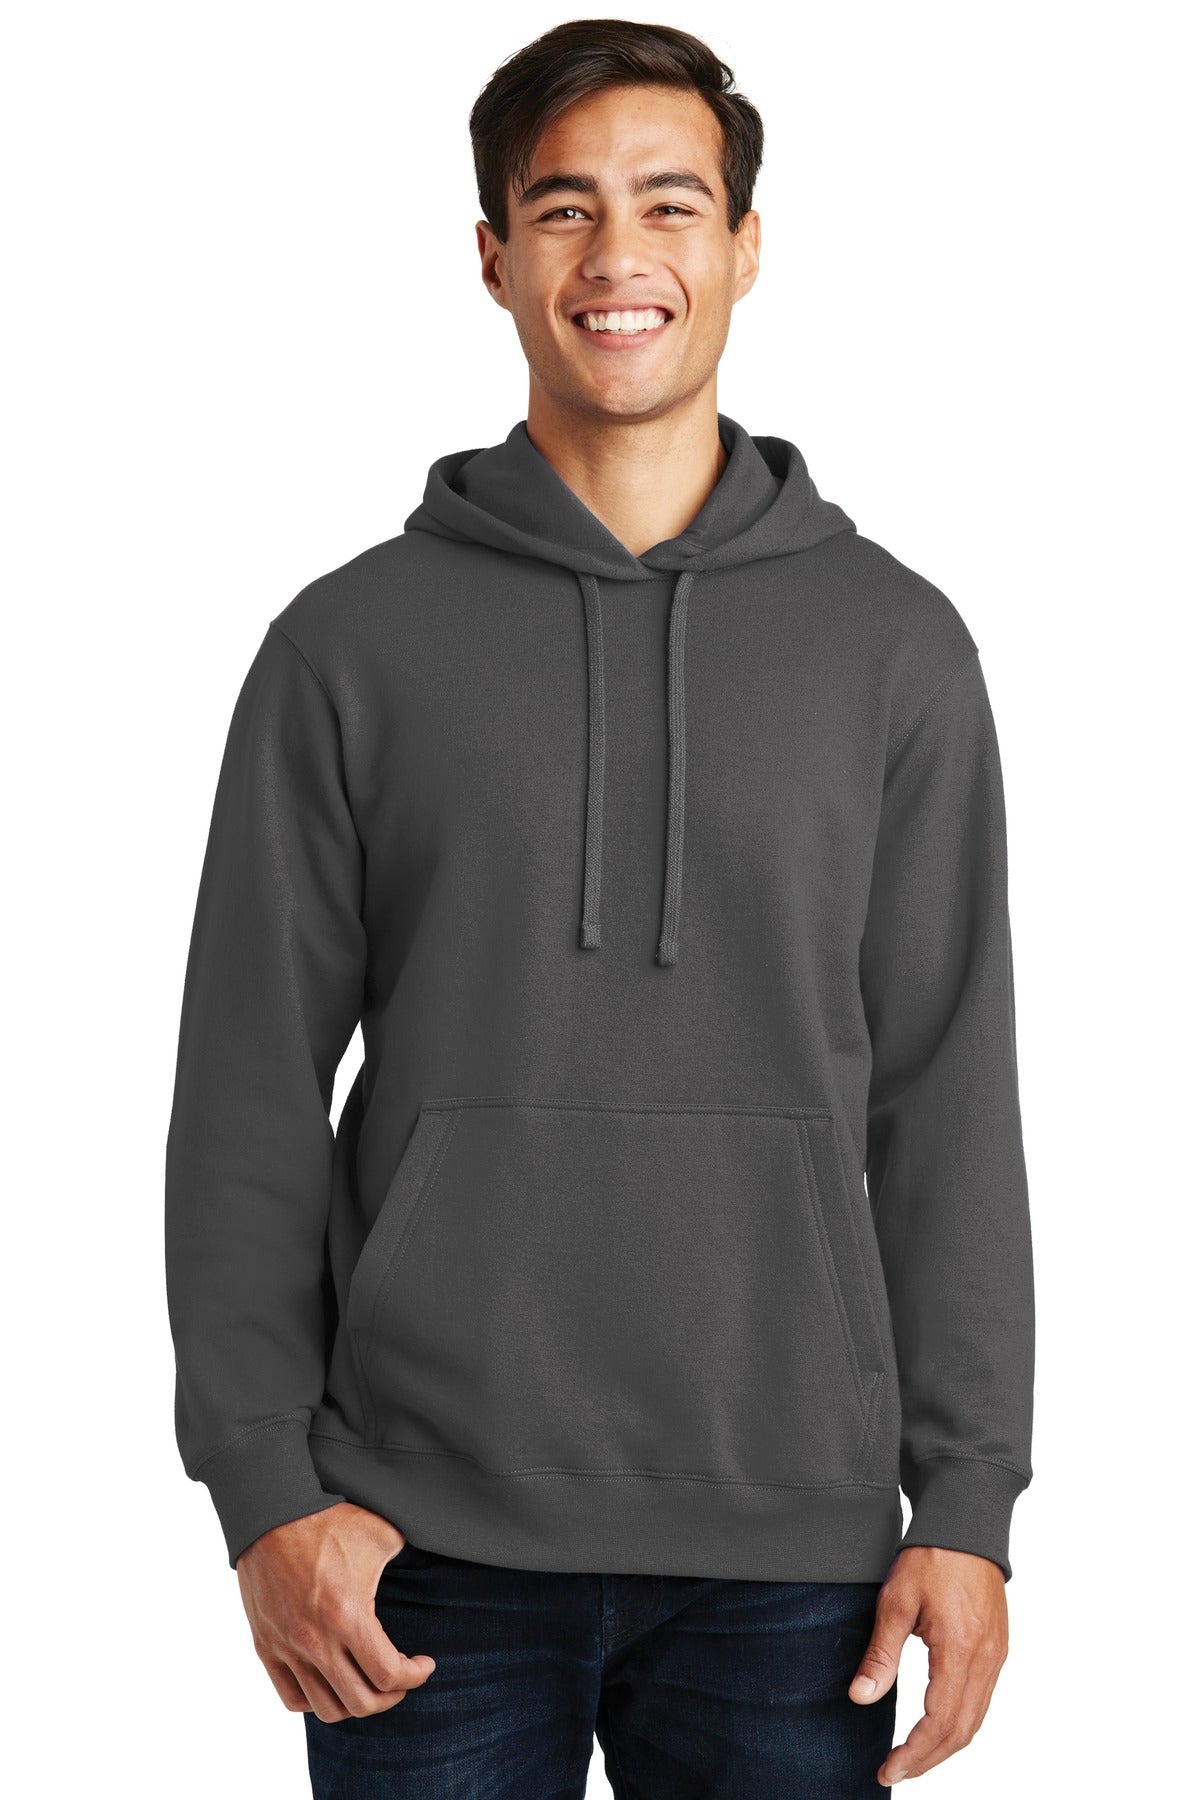 Photo of Port & Company Sweatshirts/Fleece PC850H  color  Charcoal